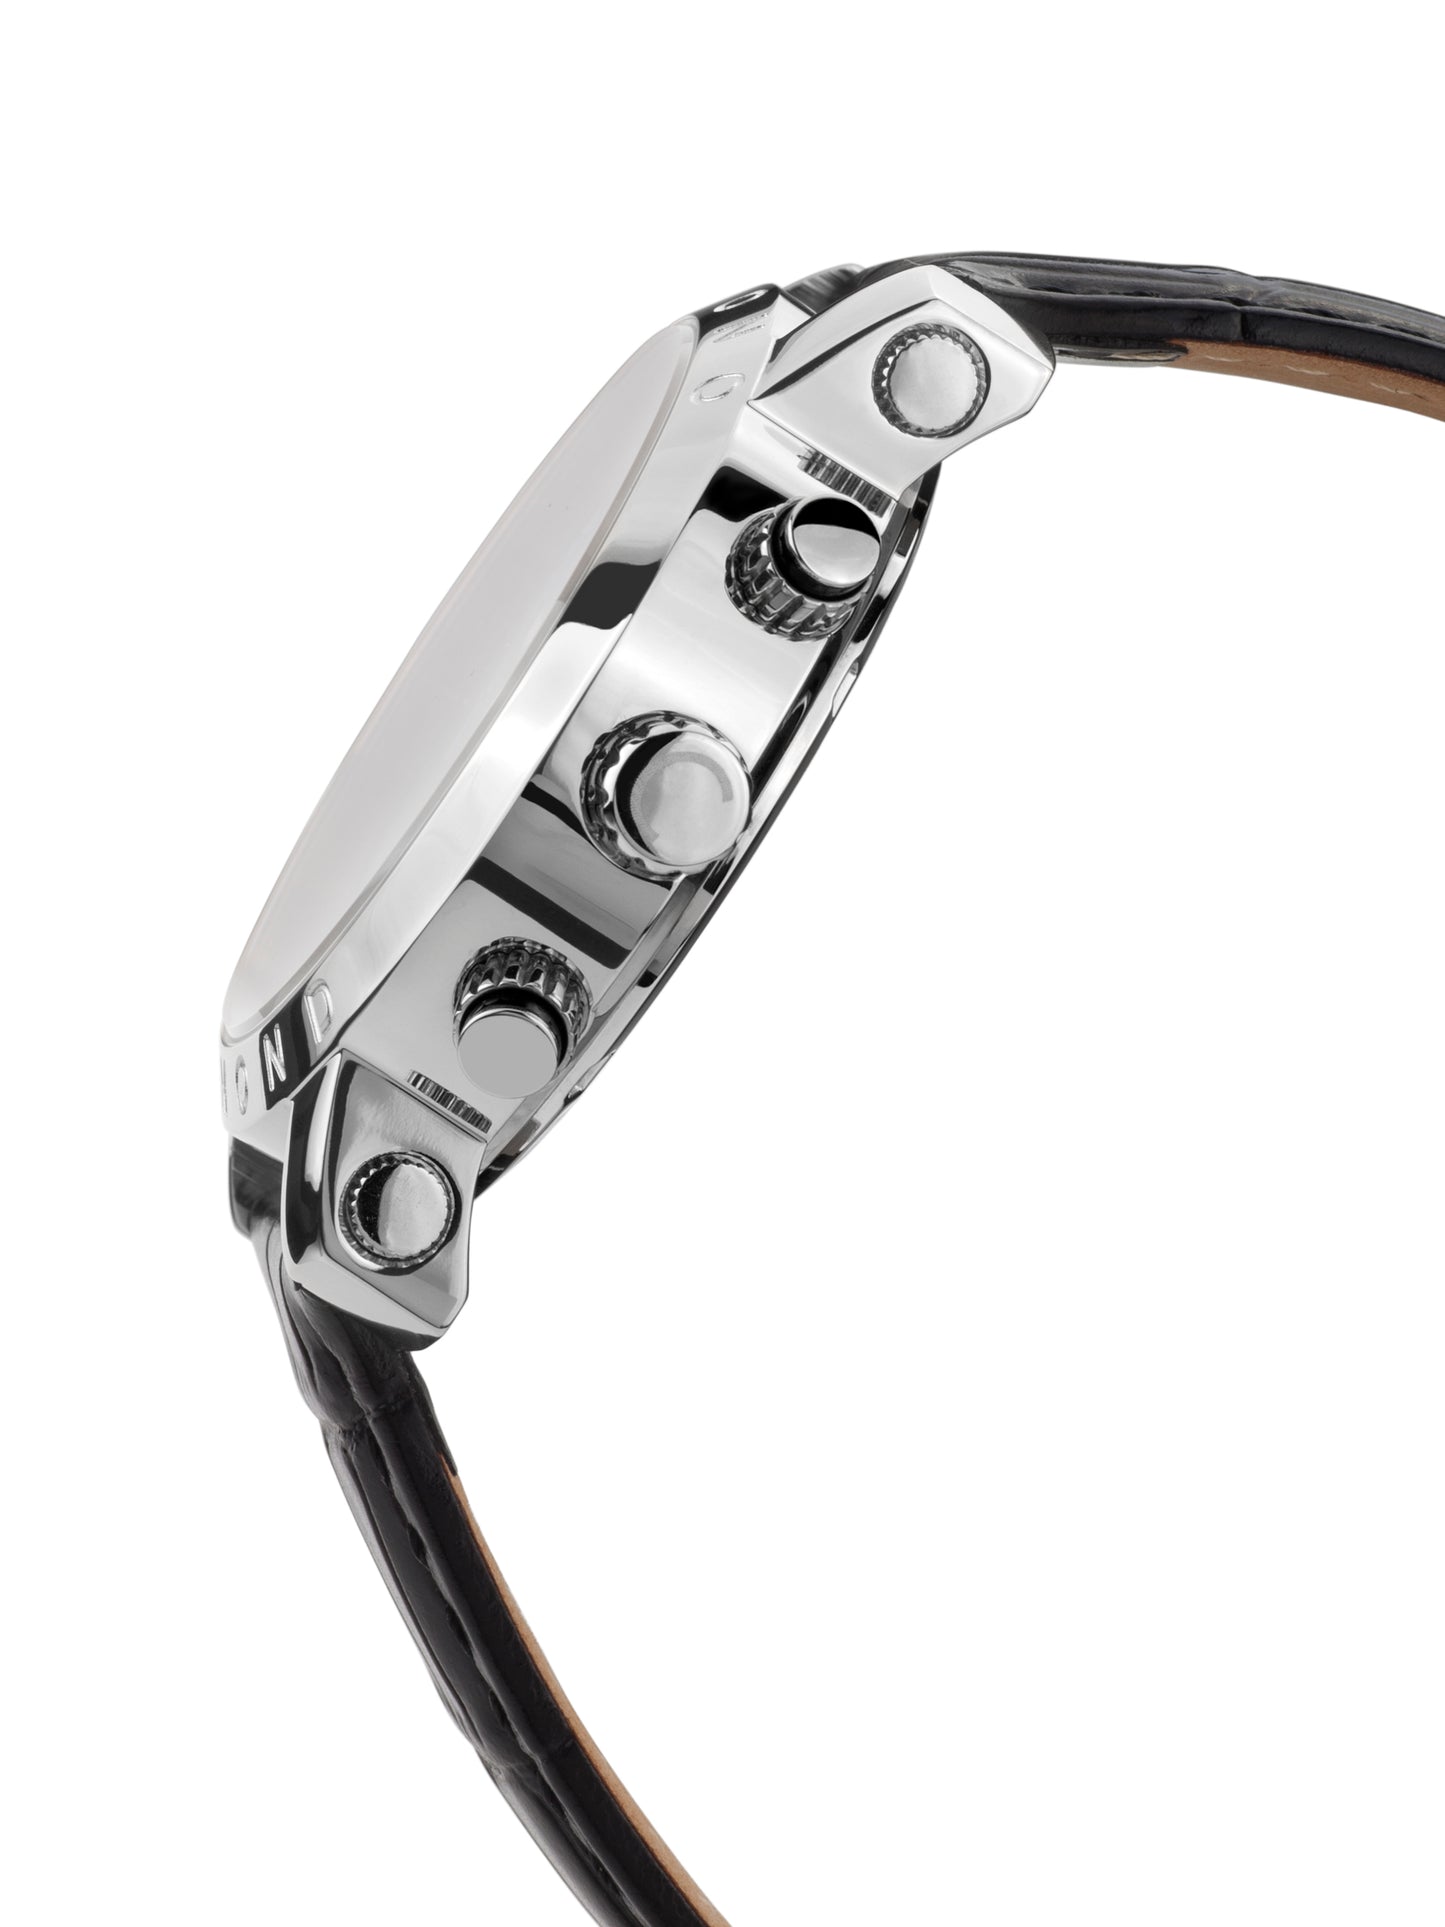 Automatic watches — Nestor — Chrono Diamond — steel black leather